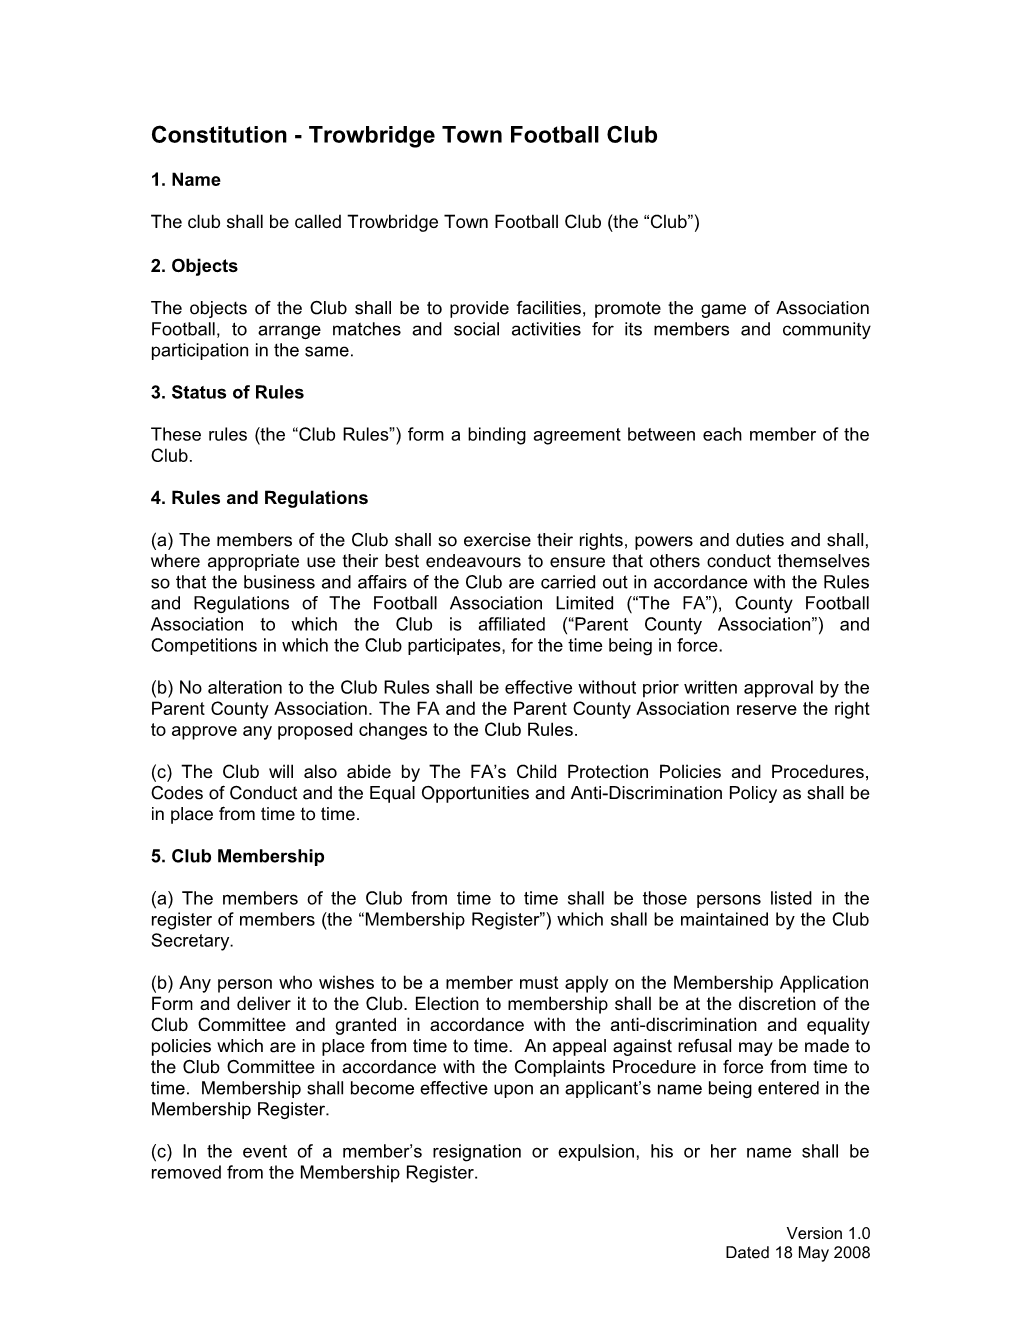 Constitution Trowbridge Town Football Club